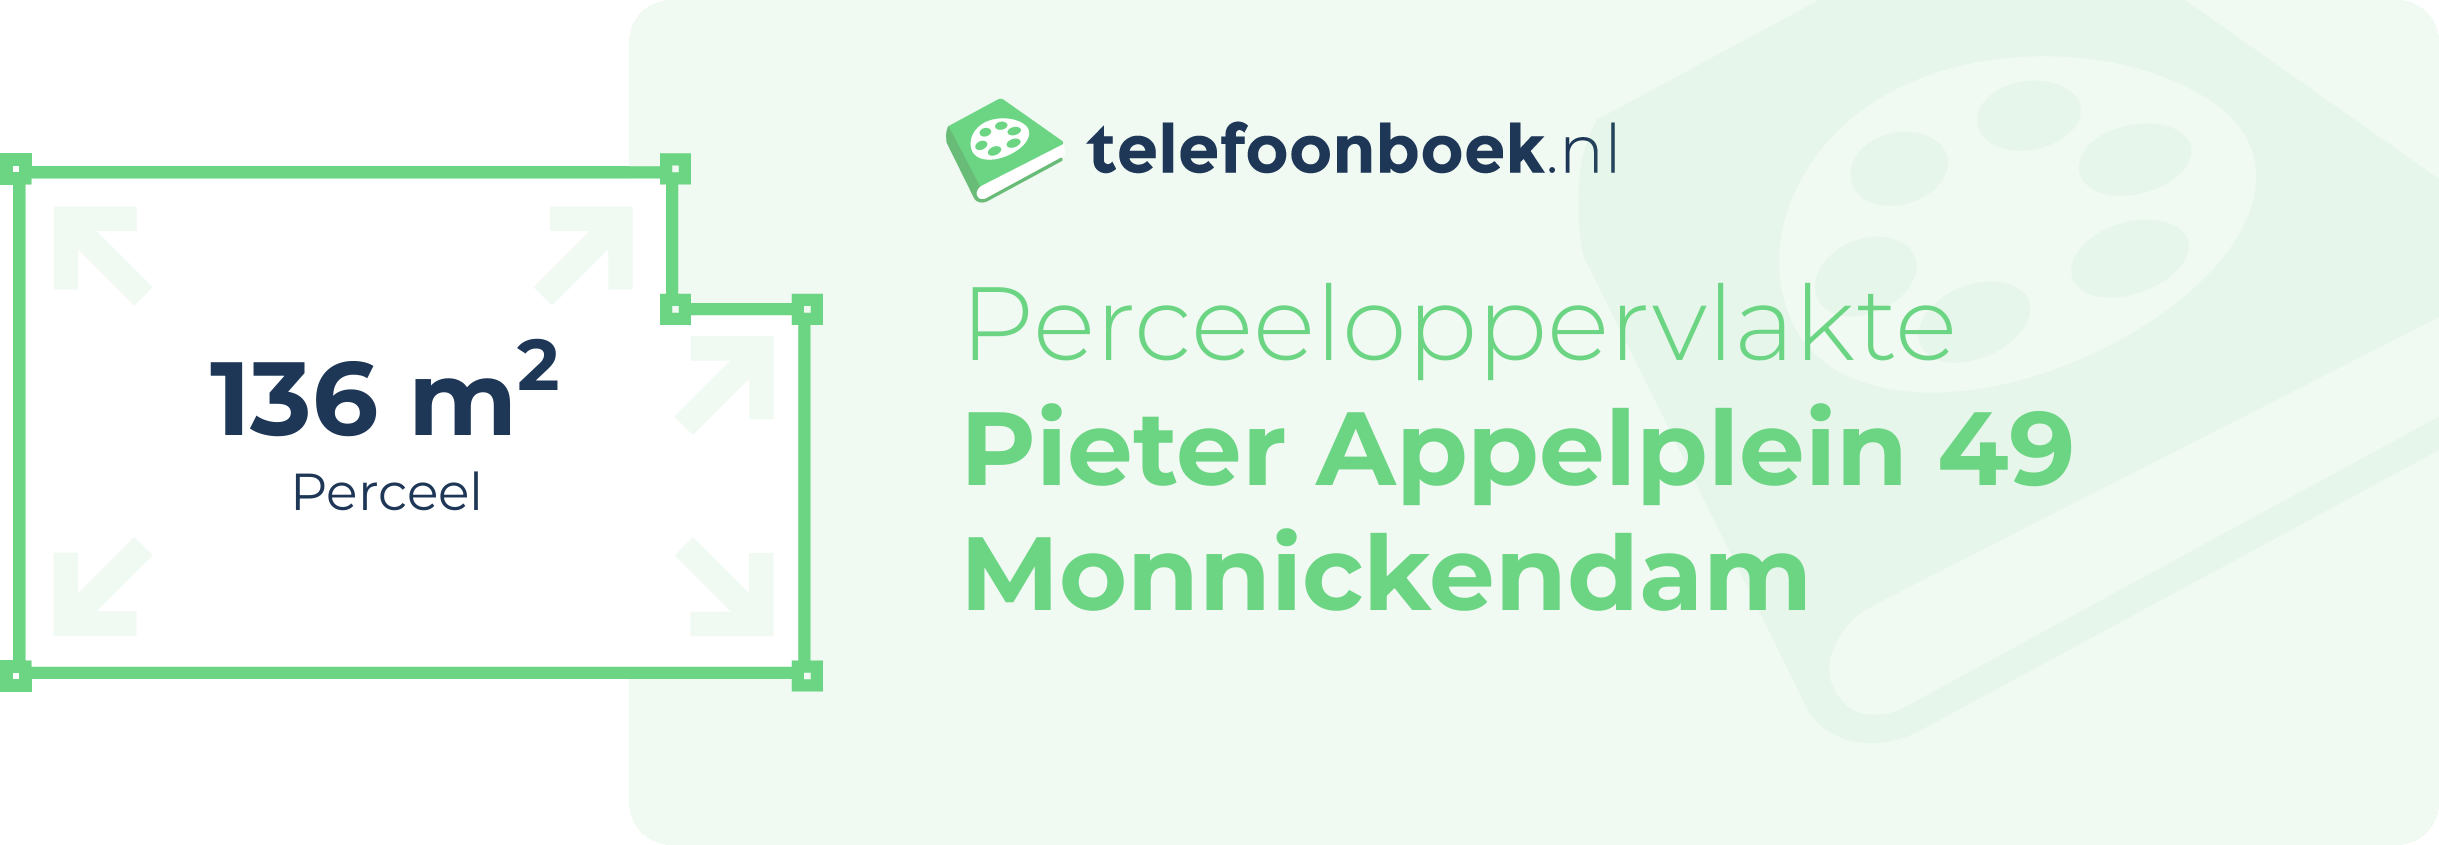 Perceeloppervlakte Pieter Appelplein 49 Monnickendam